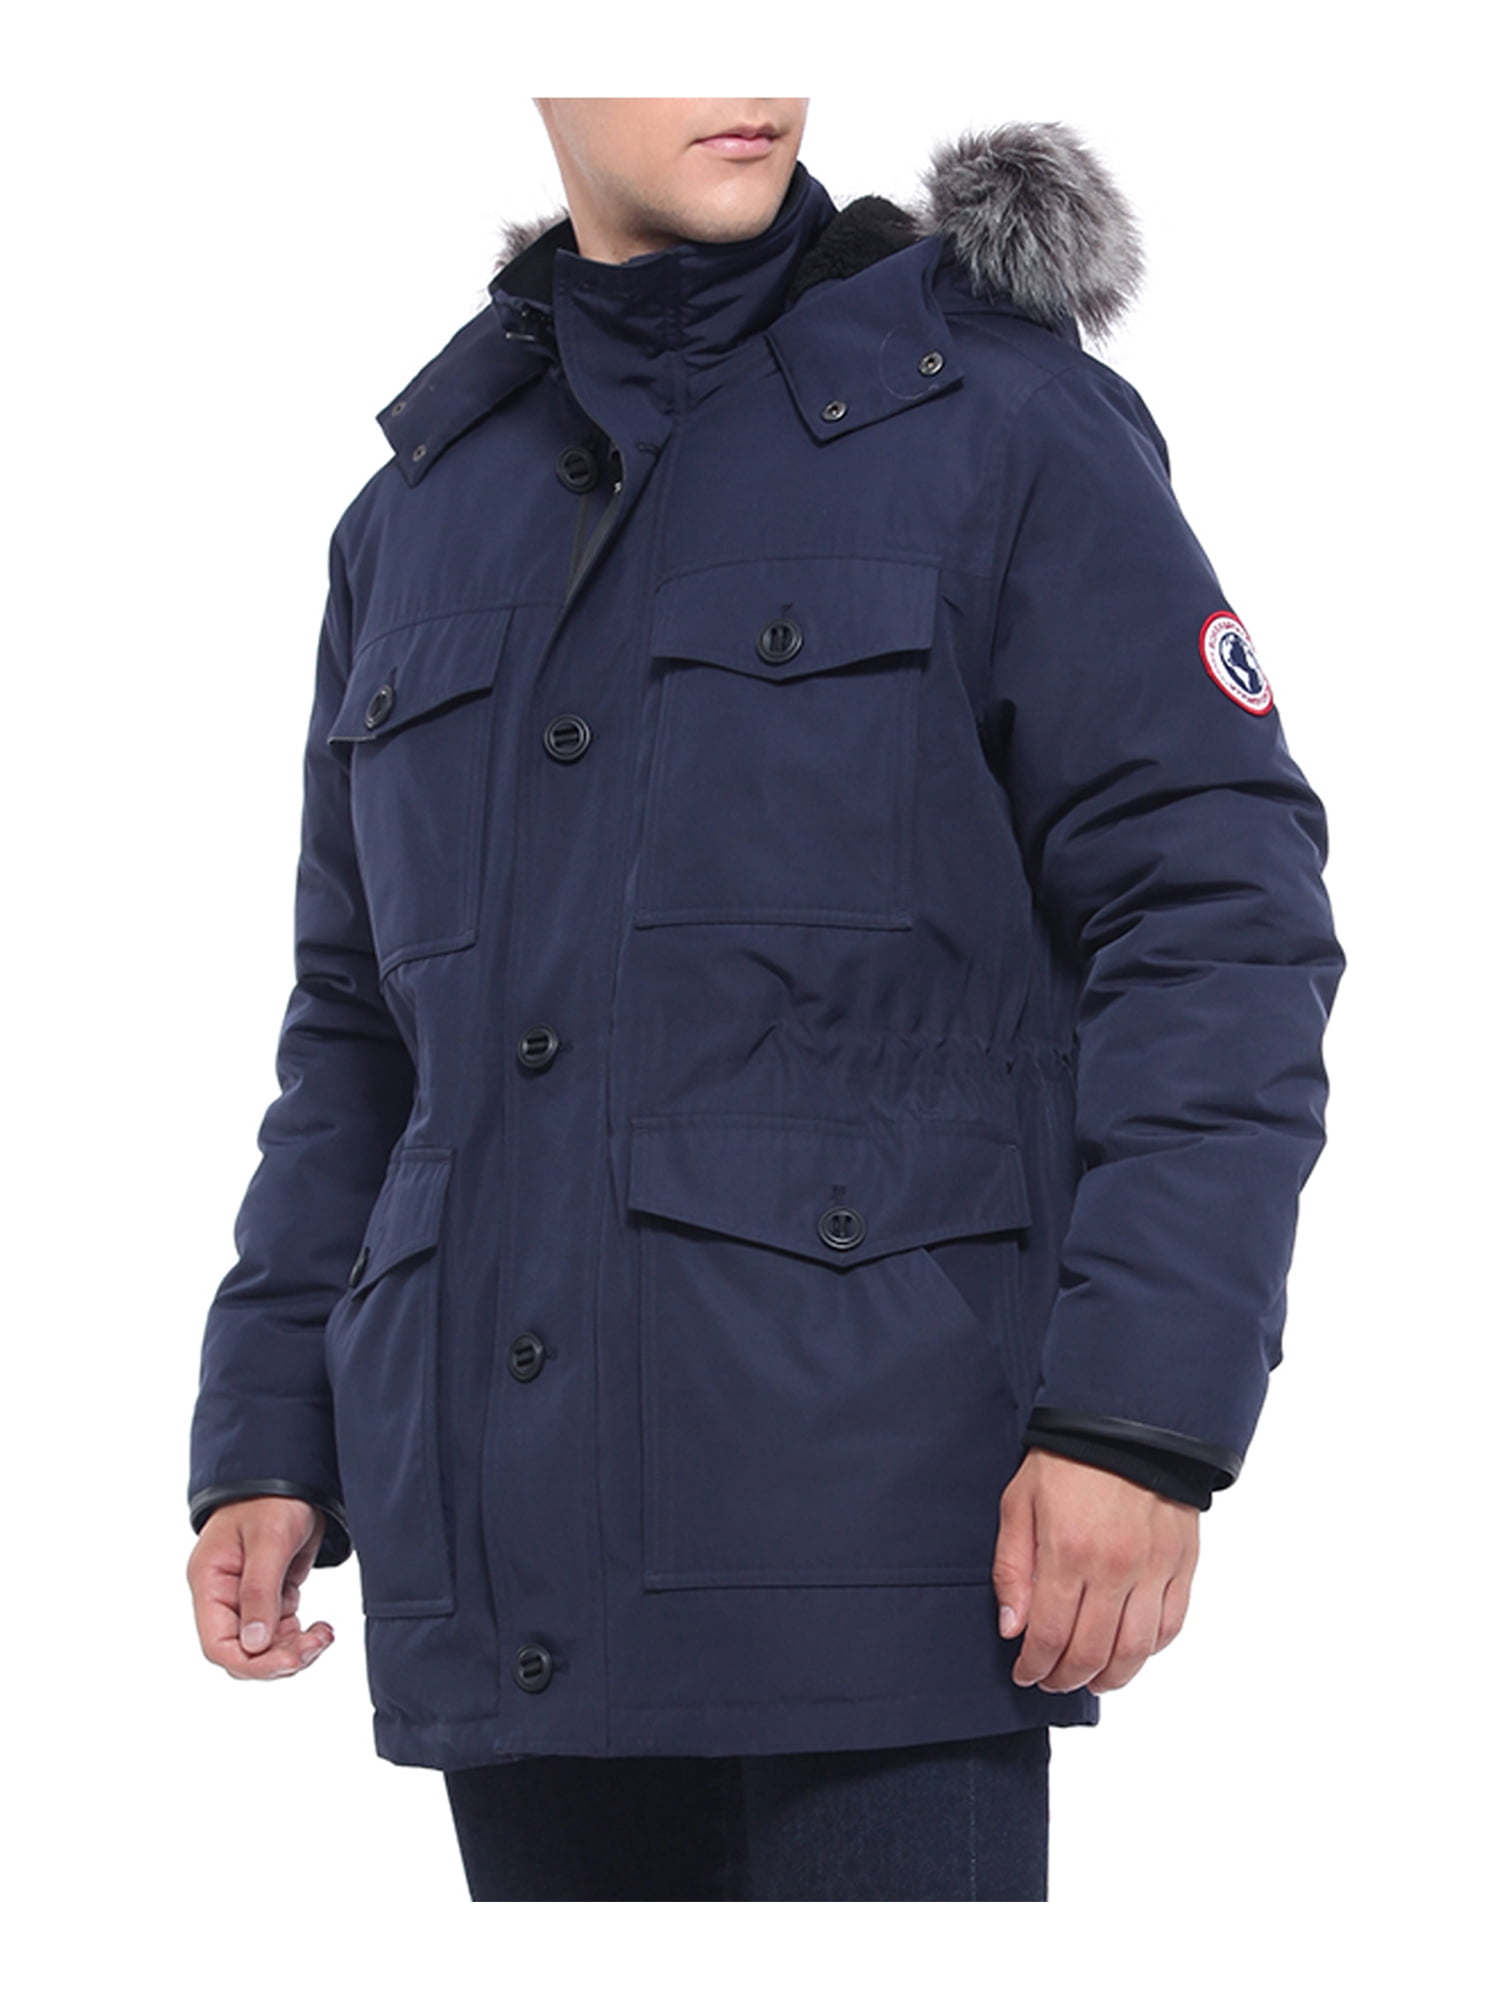 DEELIN 2019 Sale Coats for Women Winter Long Sleeve Tops Thick Plush Hooded Parker Coats Ladies Down Jacket Cotton-Padded Long Cardigans Warm Outwear 